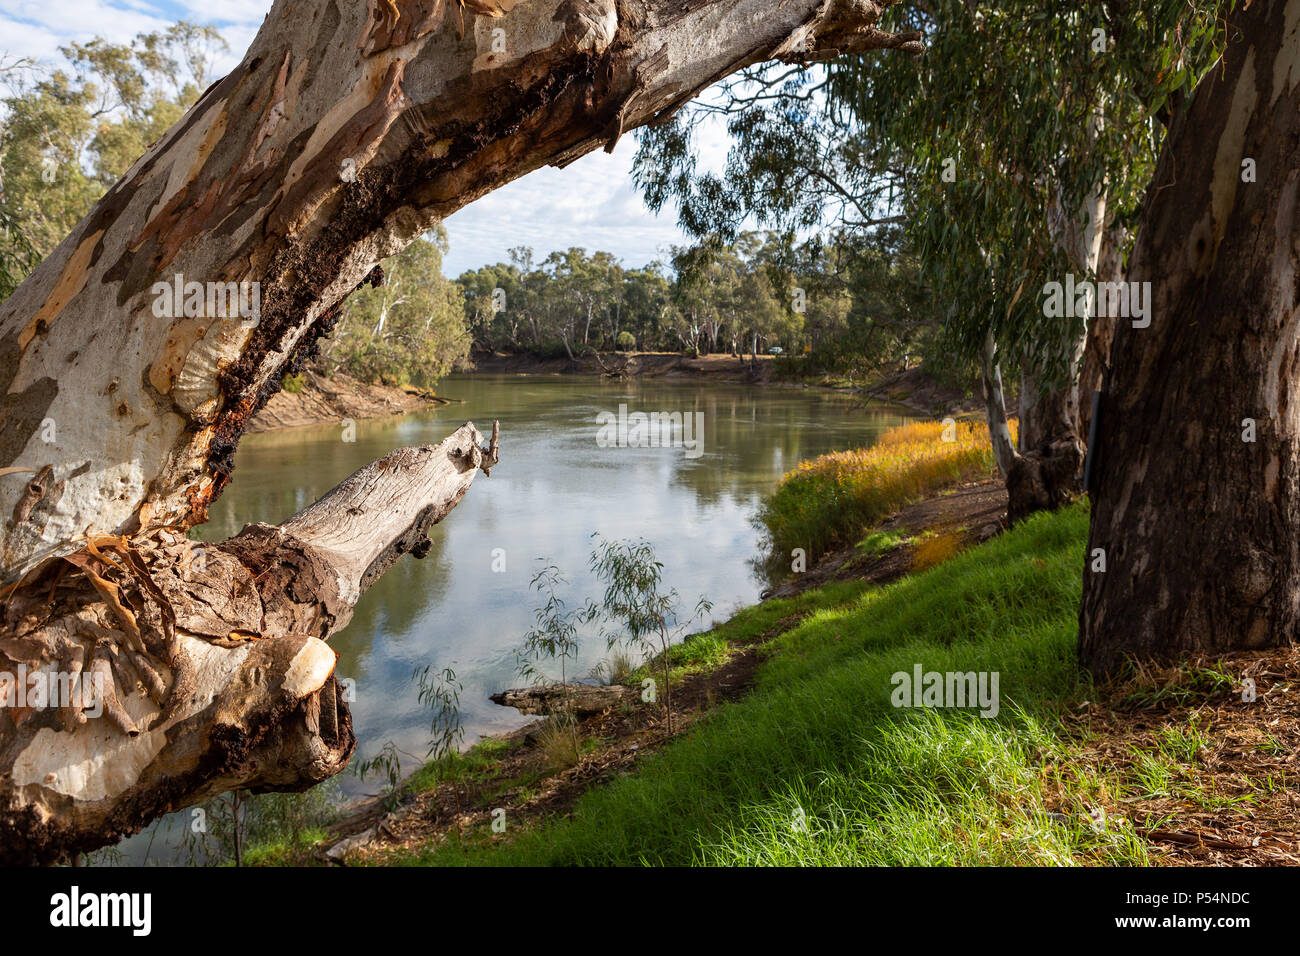 Die redgum Bäume am Ufer des Flusses Murray in Tooleybuc New South Wales Australien am 11. Juni 2018 Stockfoto